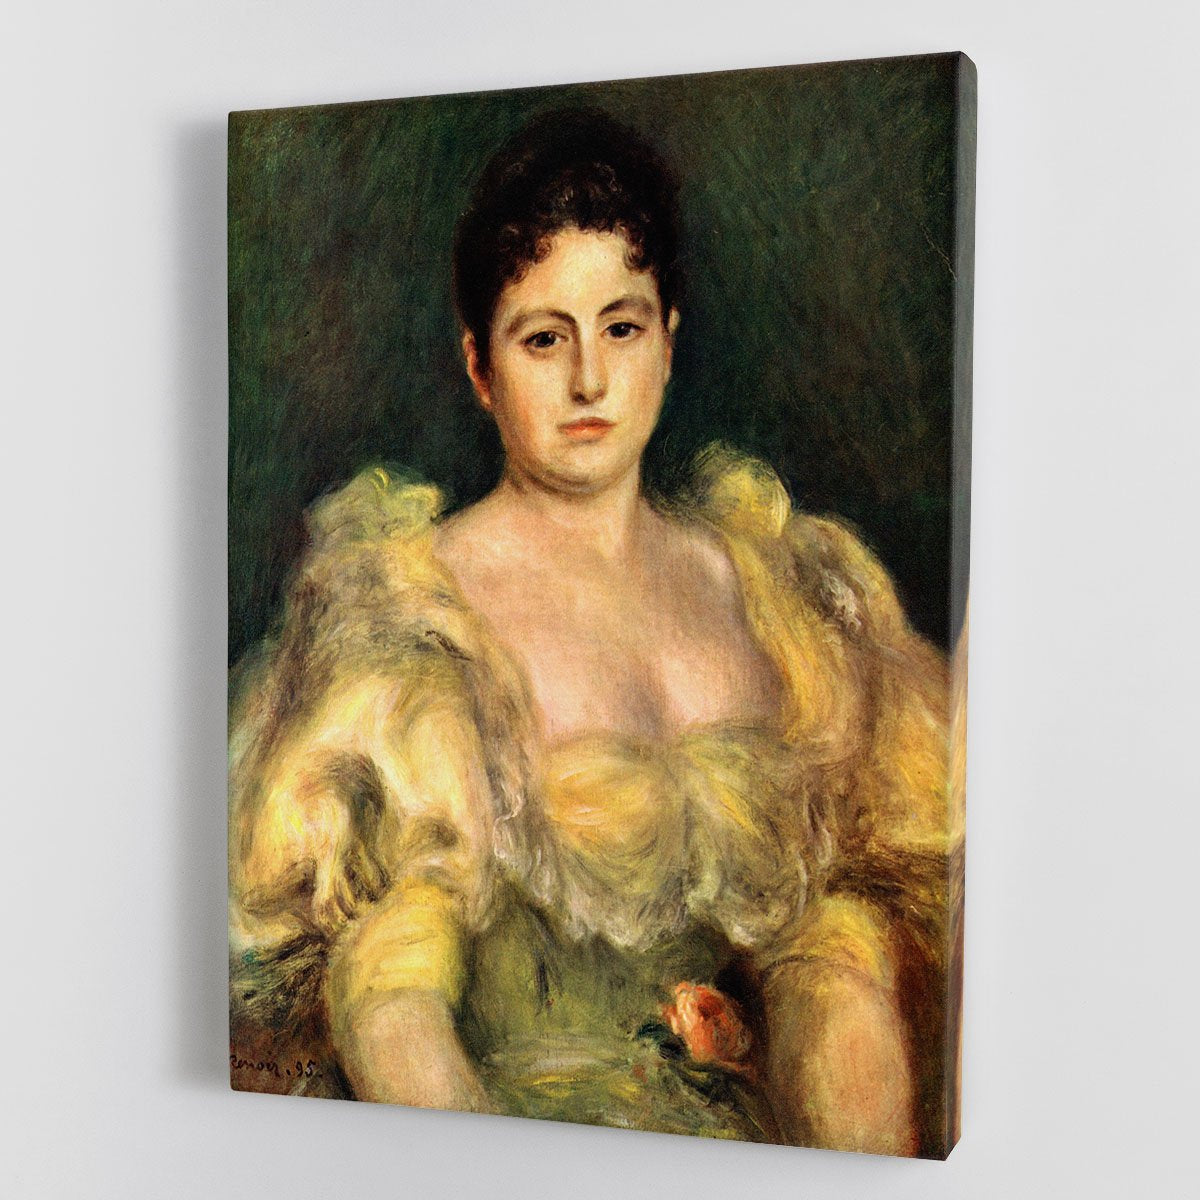 Mme Stephen Pichon by Renoir Canvas Print or Poster